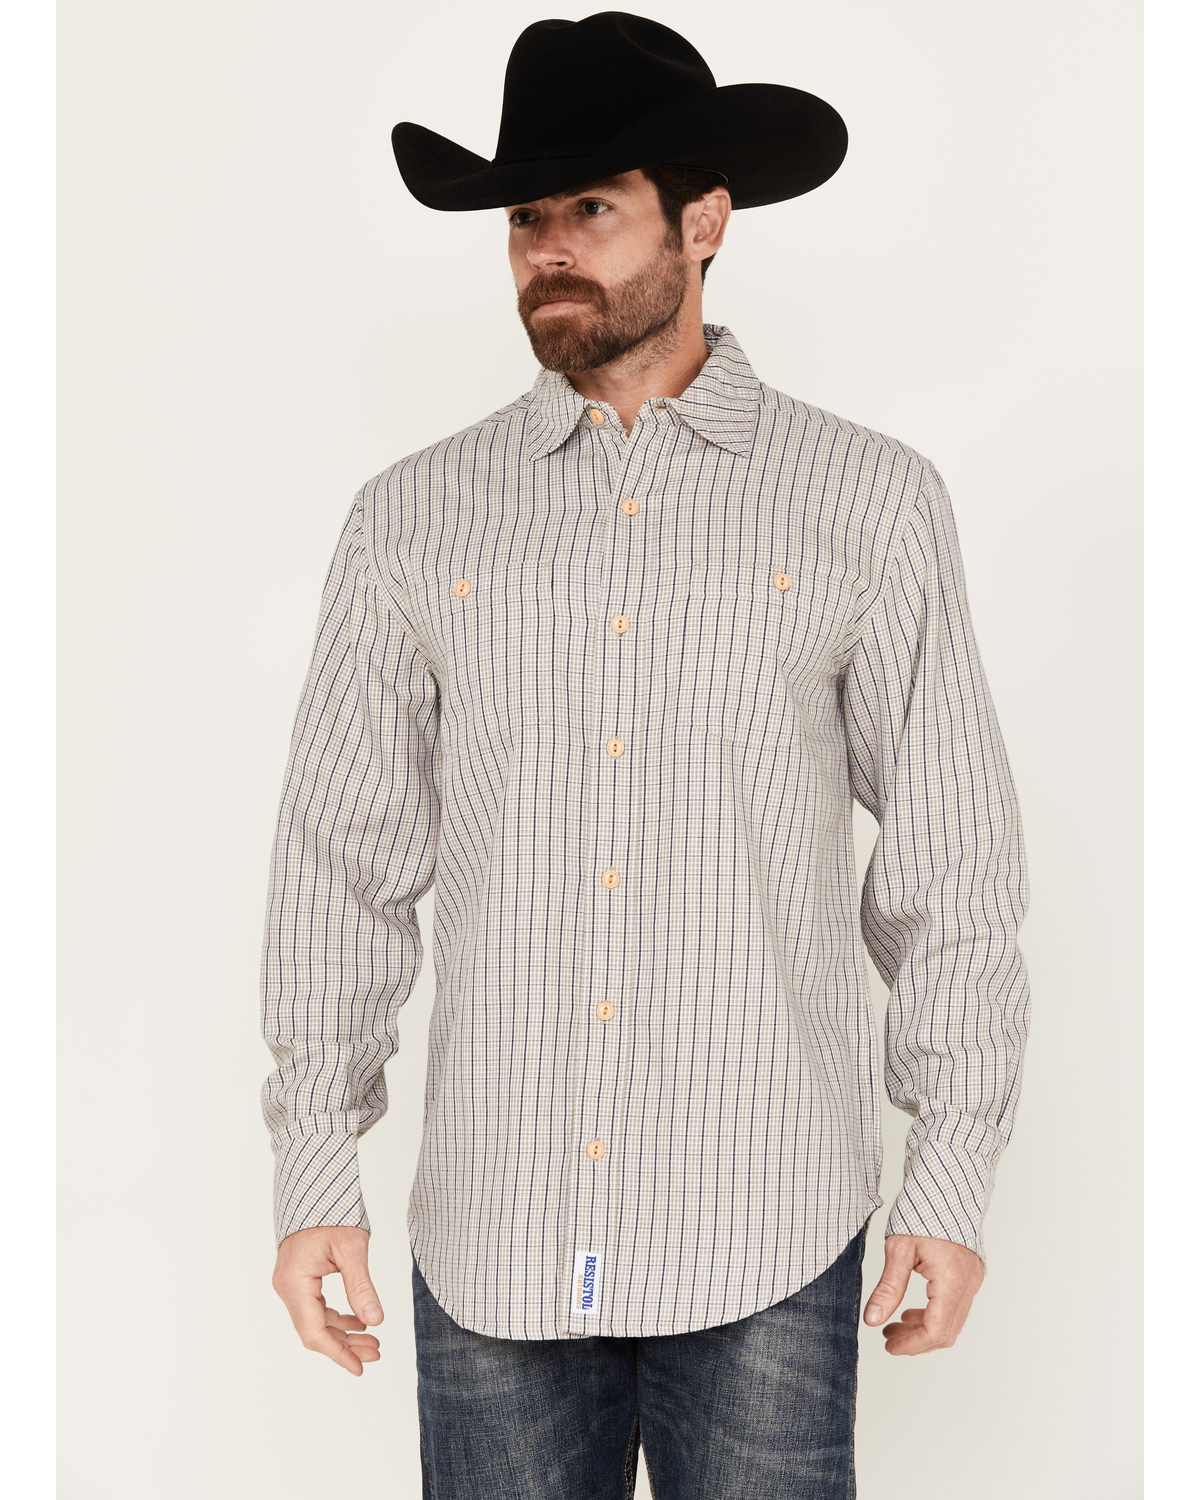 Resistol Men's Graves Checkered Print Long Sleeve Button-Down Western Shirt